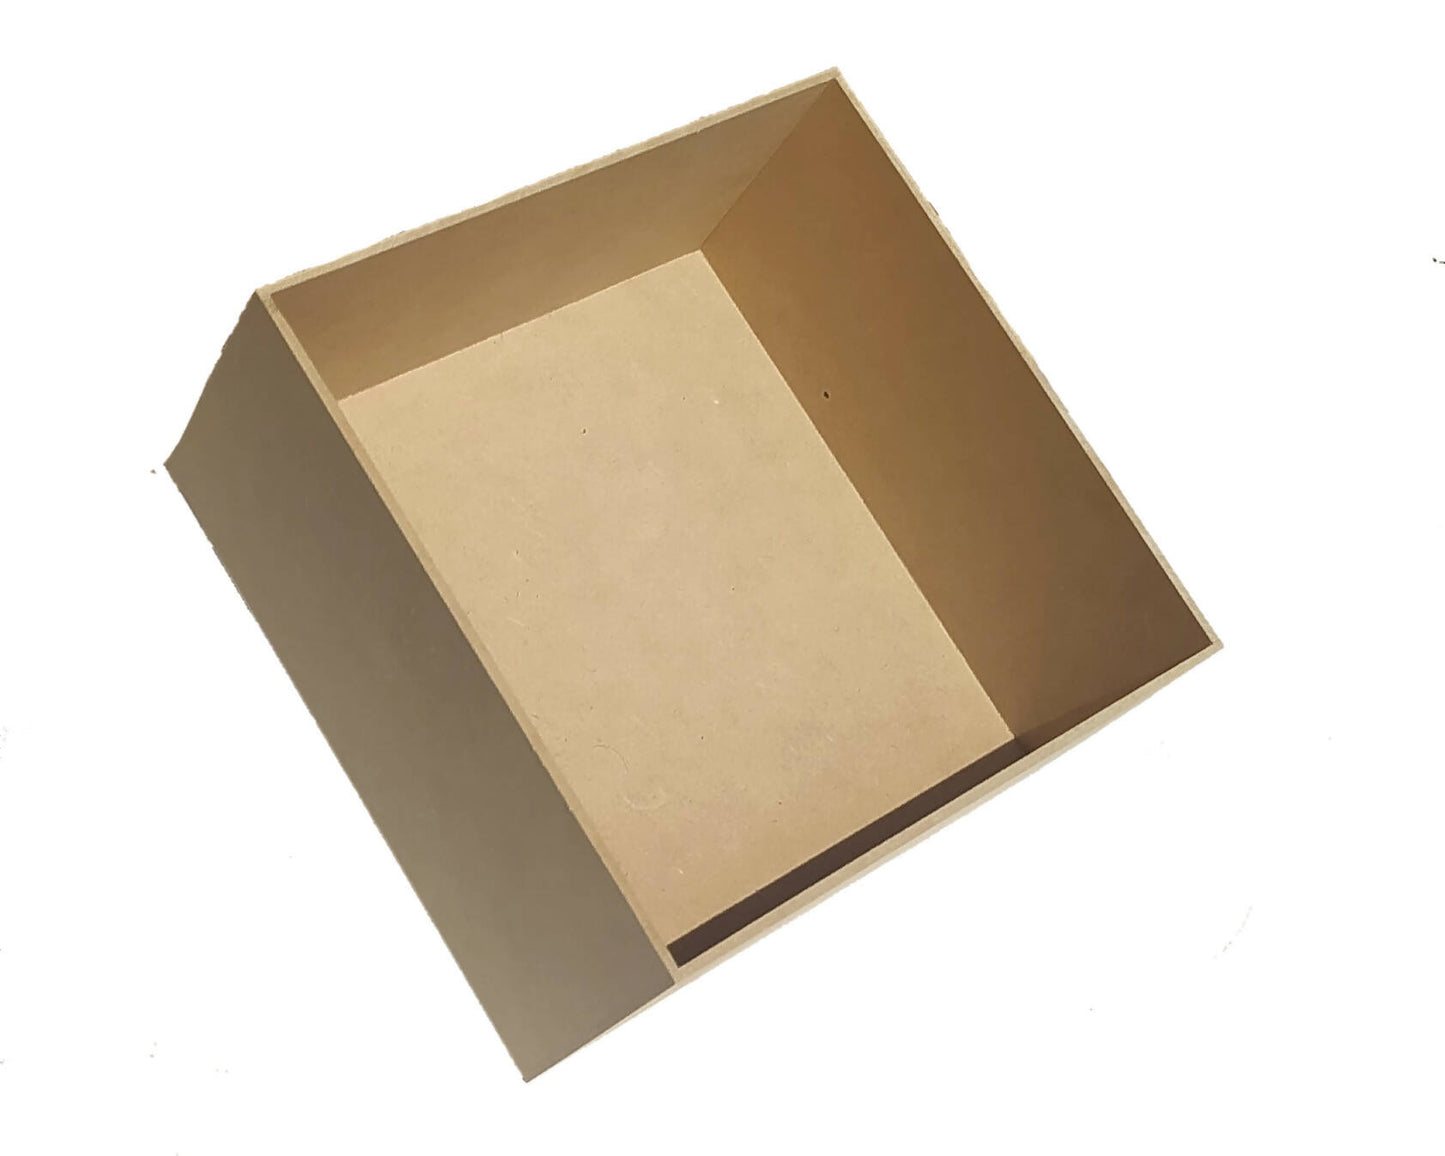 Caja para regalo de madera (MDF)